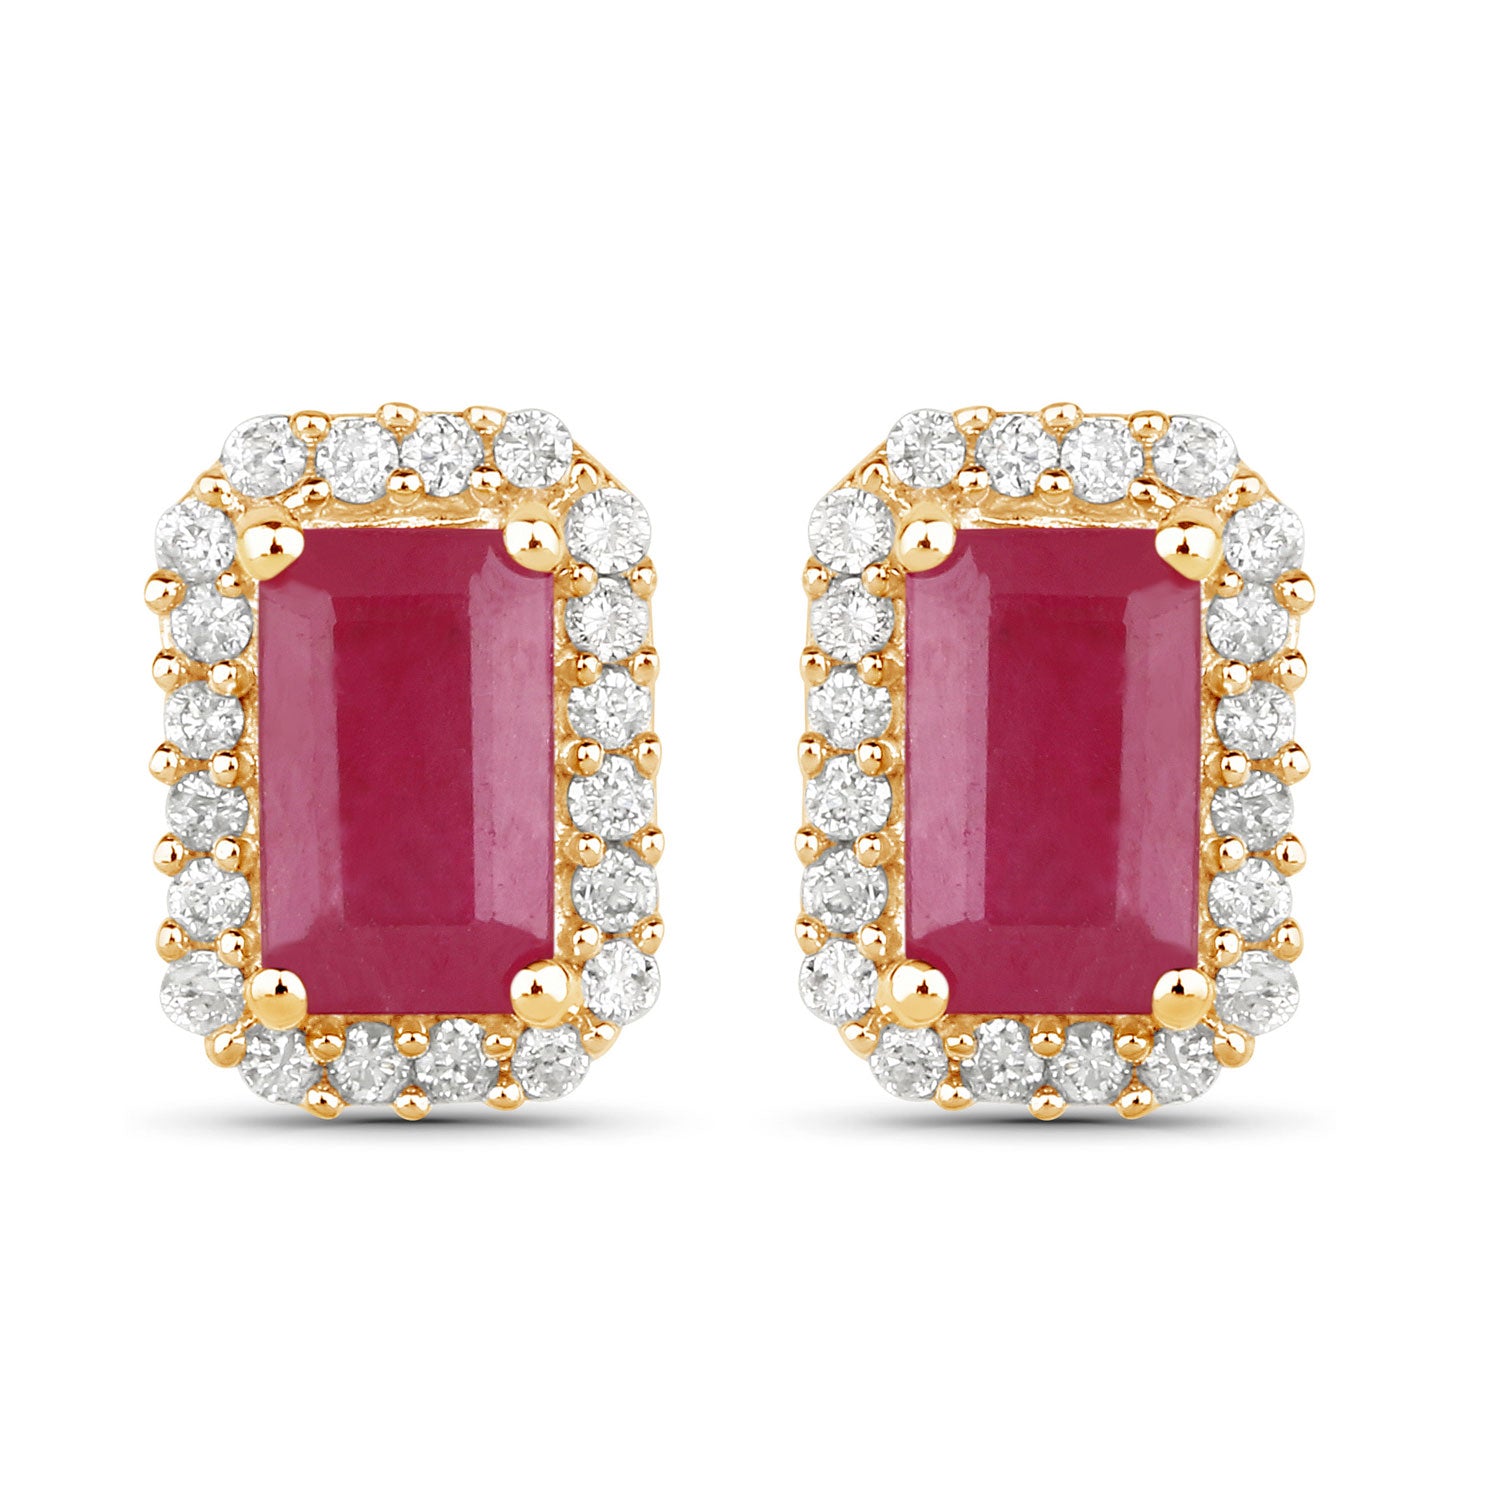 Genuine Ruby and White Diamond 14K Yellow Gold Earrings